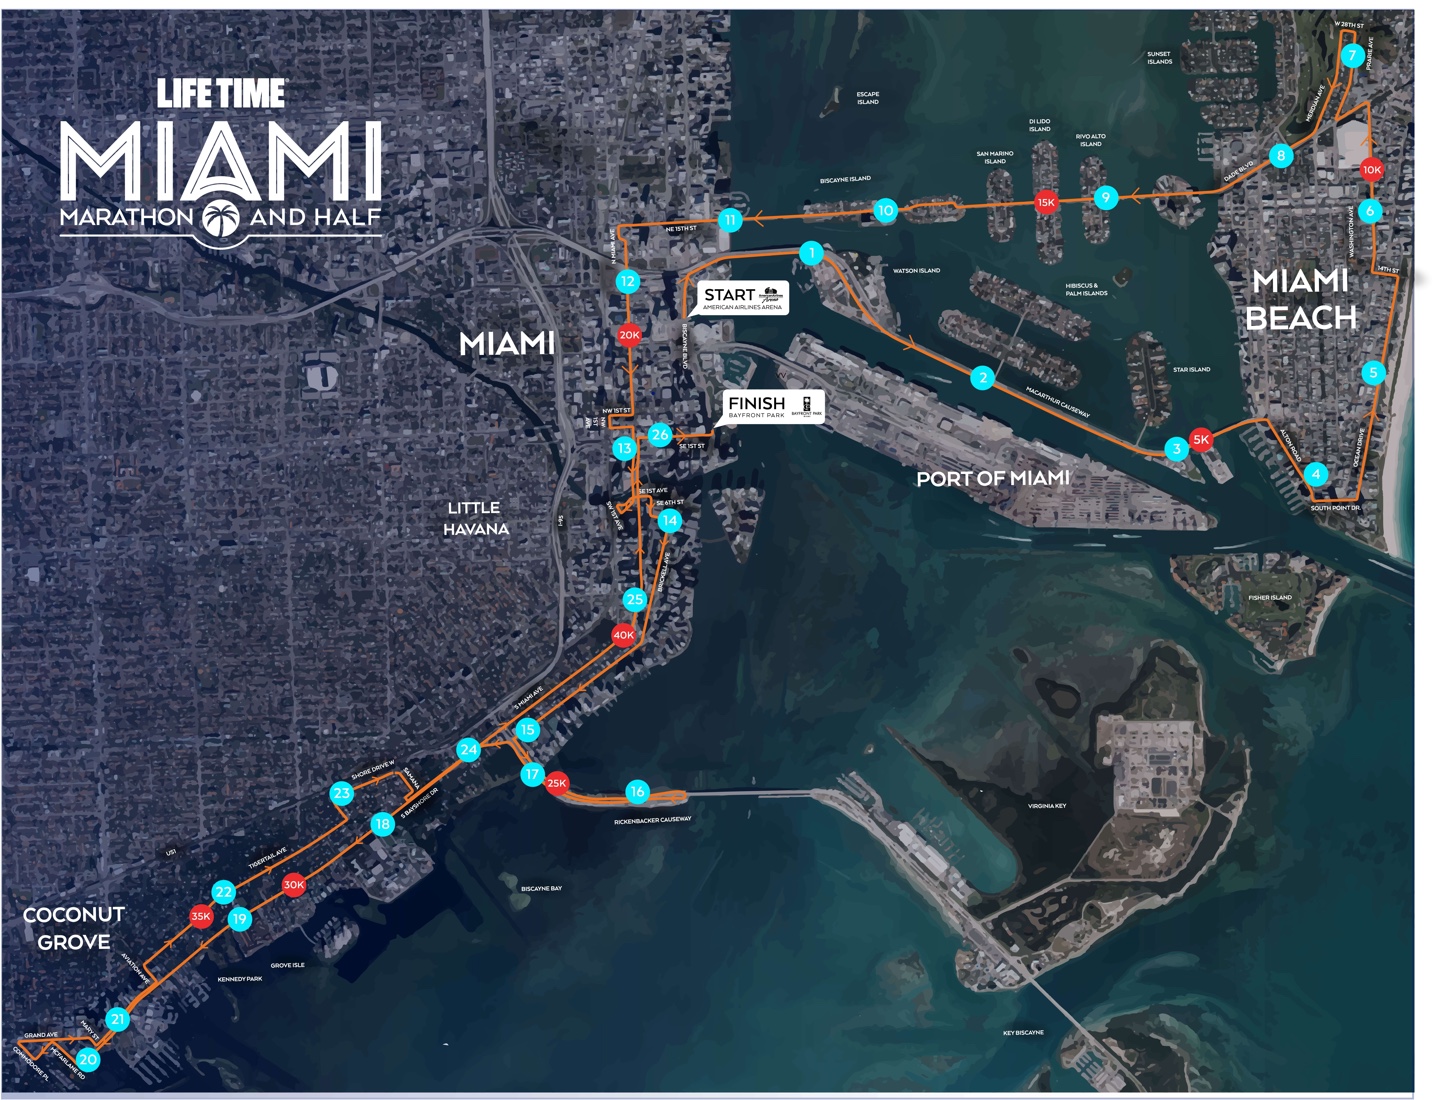 20th Miami Marathon and Half Marathon (Life Time Miami Marathon and